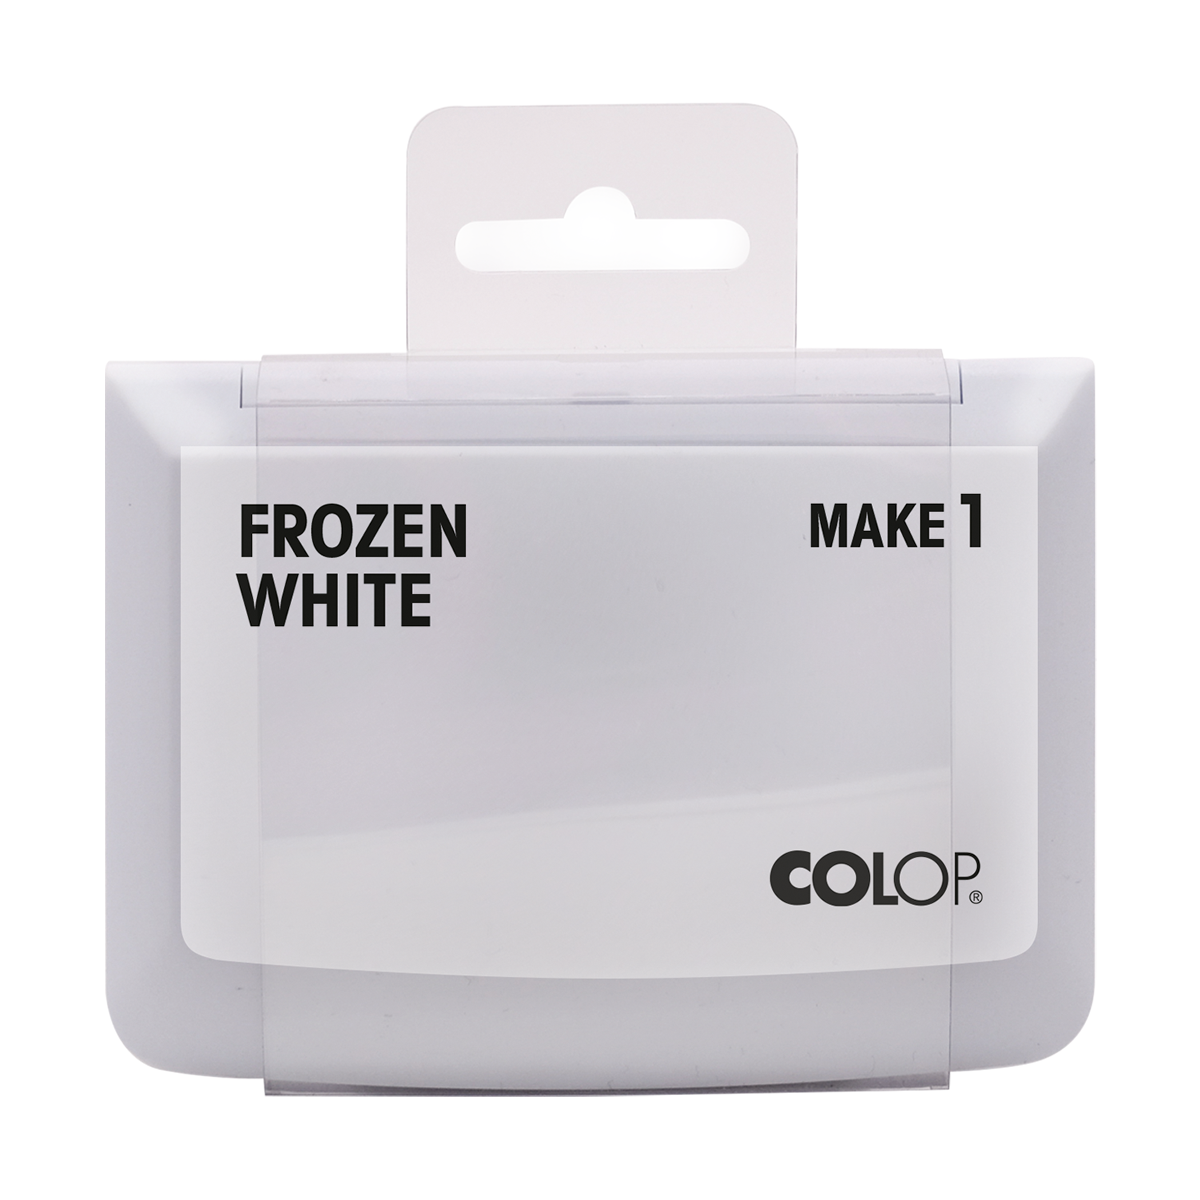 COLOP Arts & Crafts MAKE 1 Ταμπόν Σφραγίδας Frozen White